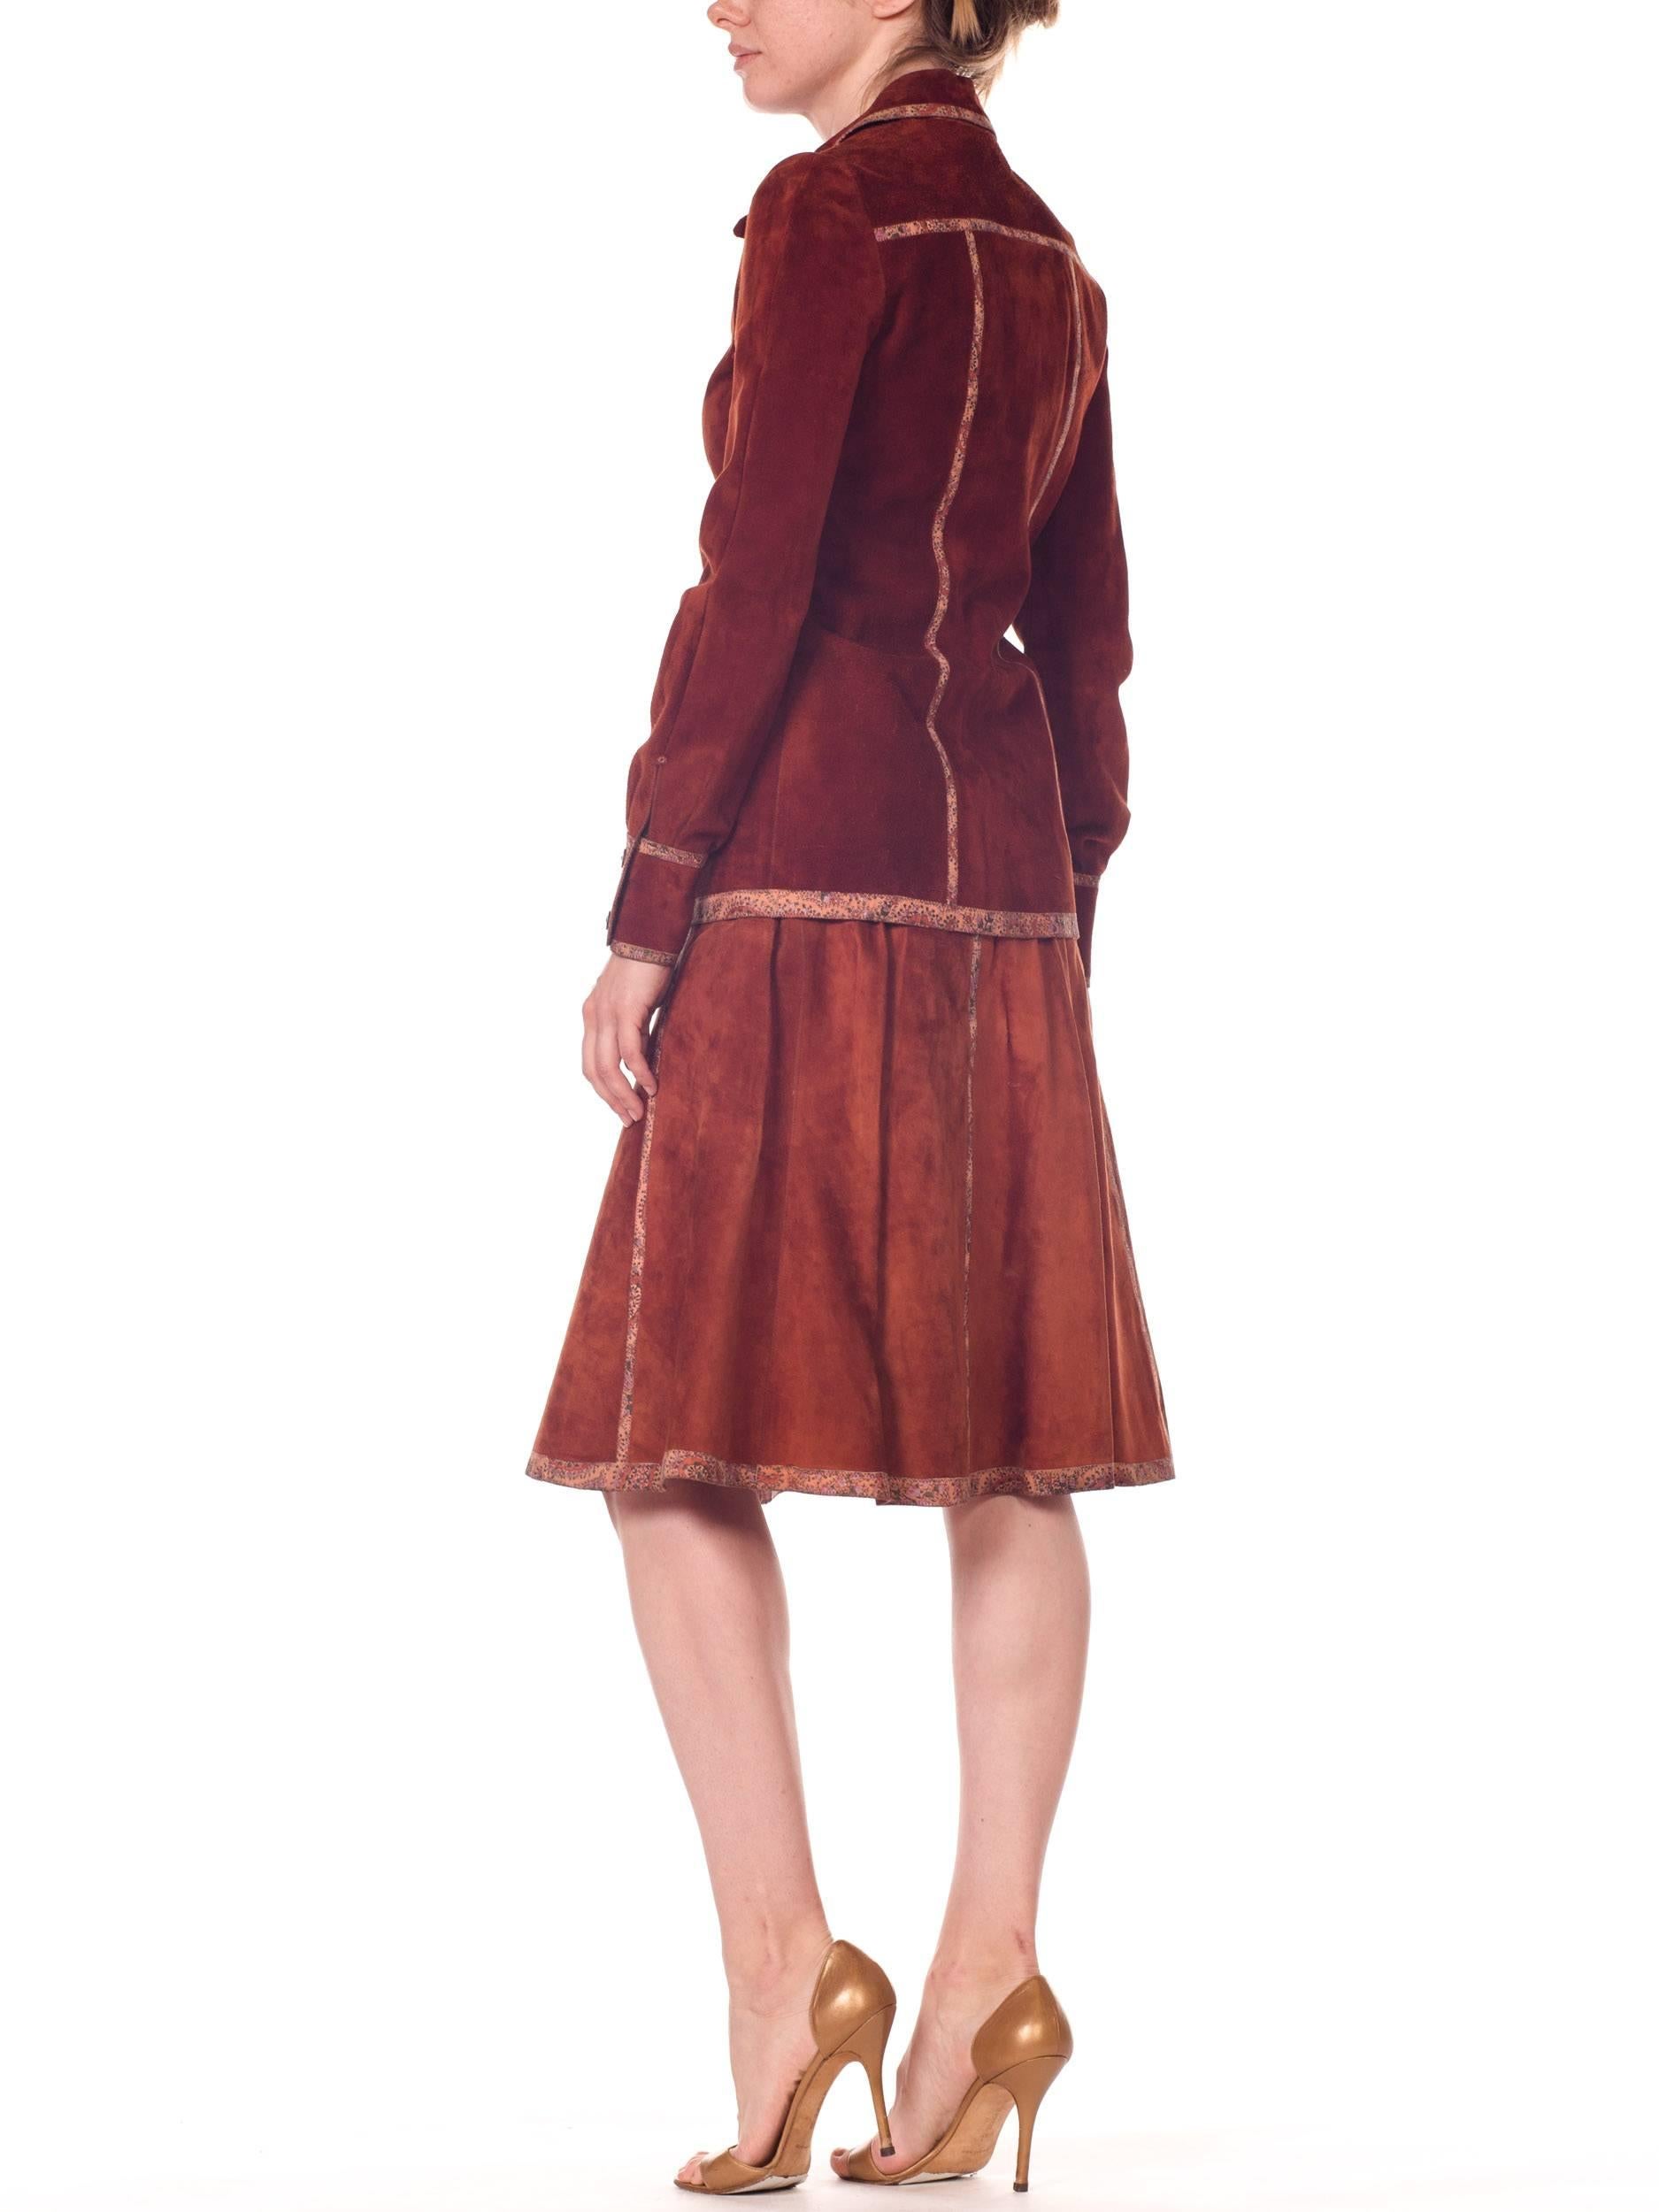 Women's Roberto Cavalli Cognac Suede with Print Panels Jacket and Skirt Set